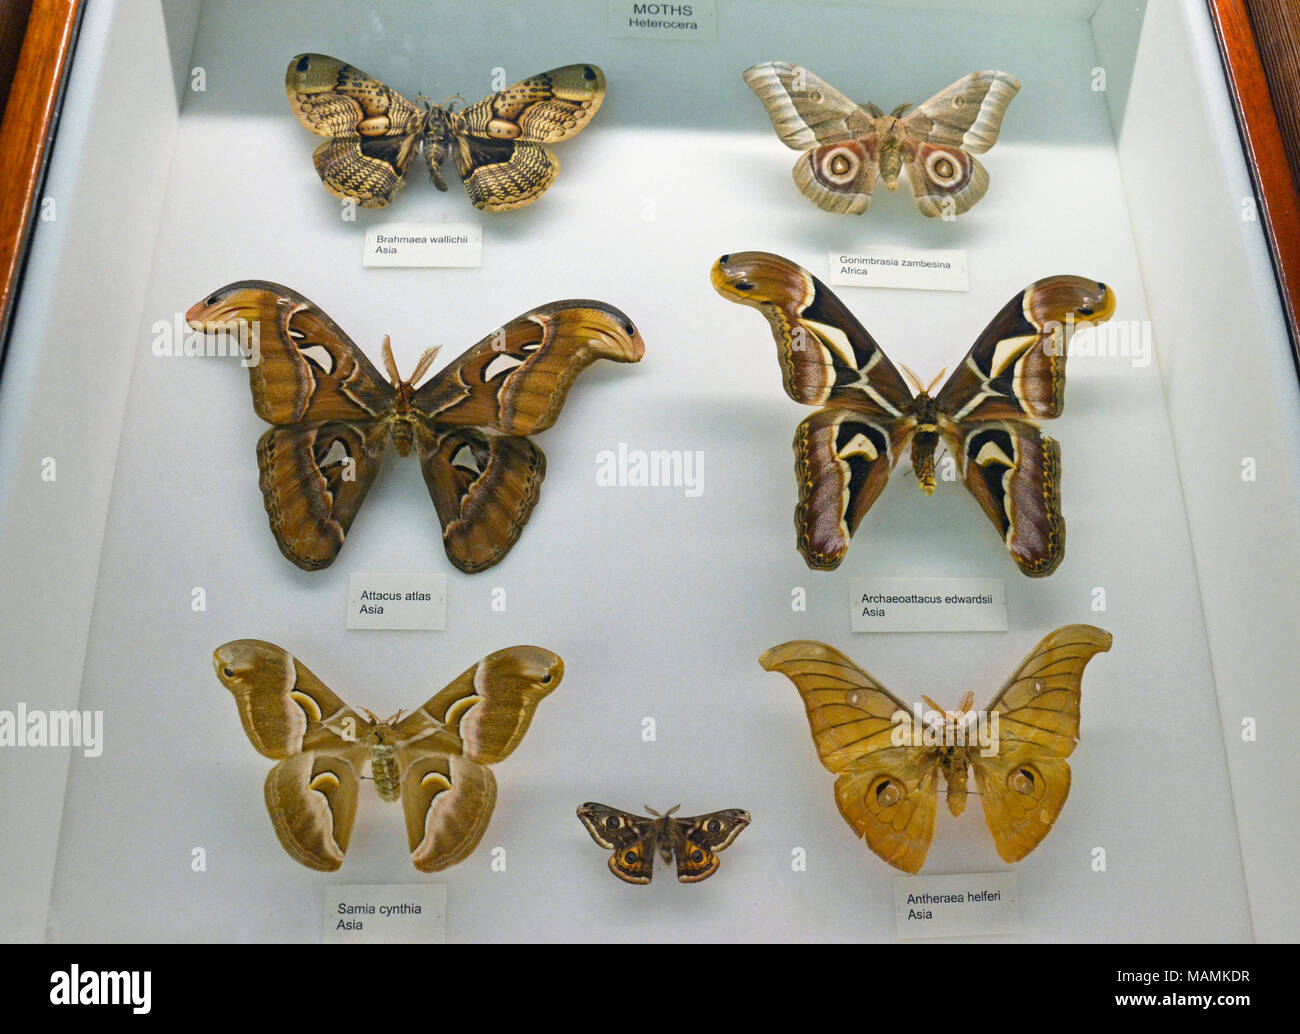 Moth display cabinet at the Natural History Museum at Tring, UK. Stock Photo